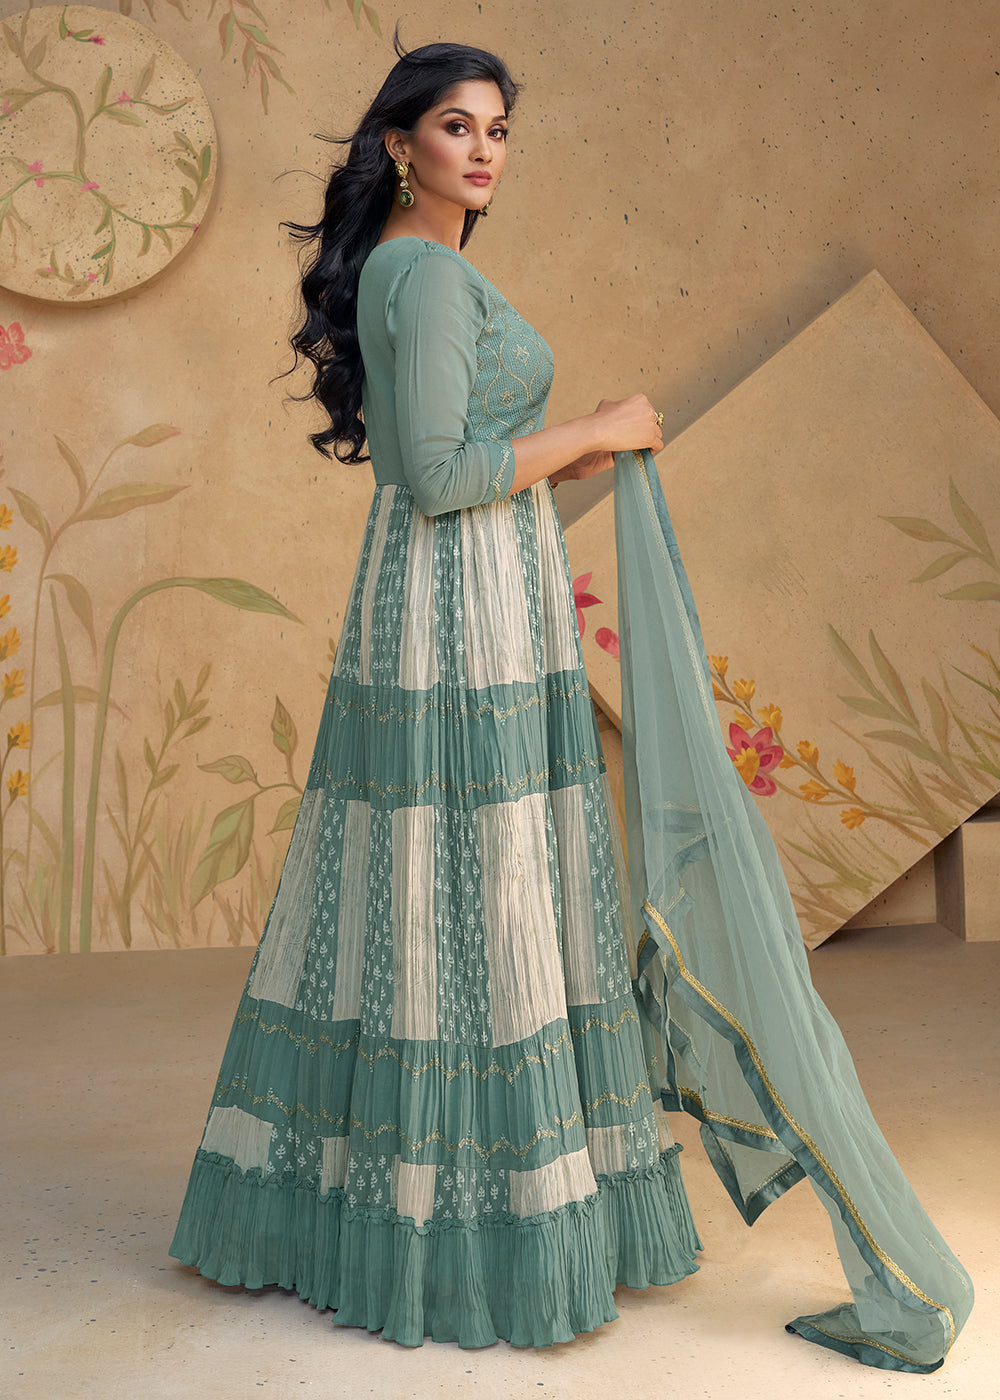 Buy Now Mint Teal Sequins & Thread Wedding Festive Anarkali Dress Online in USA, UK, Australia, New Zealand, Canada & Worldwide at Empress Clothing.